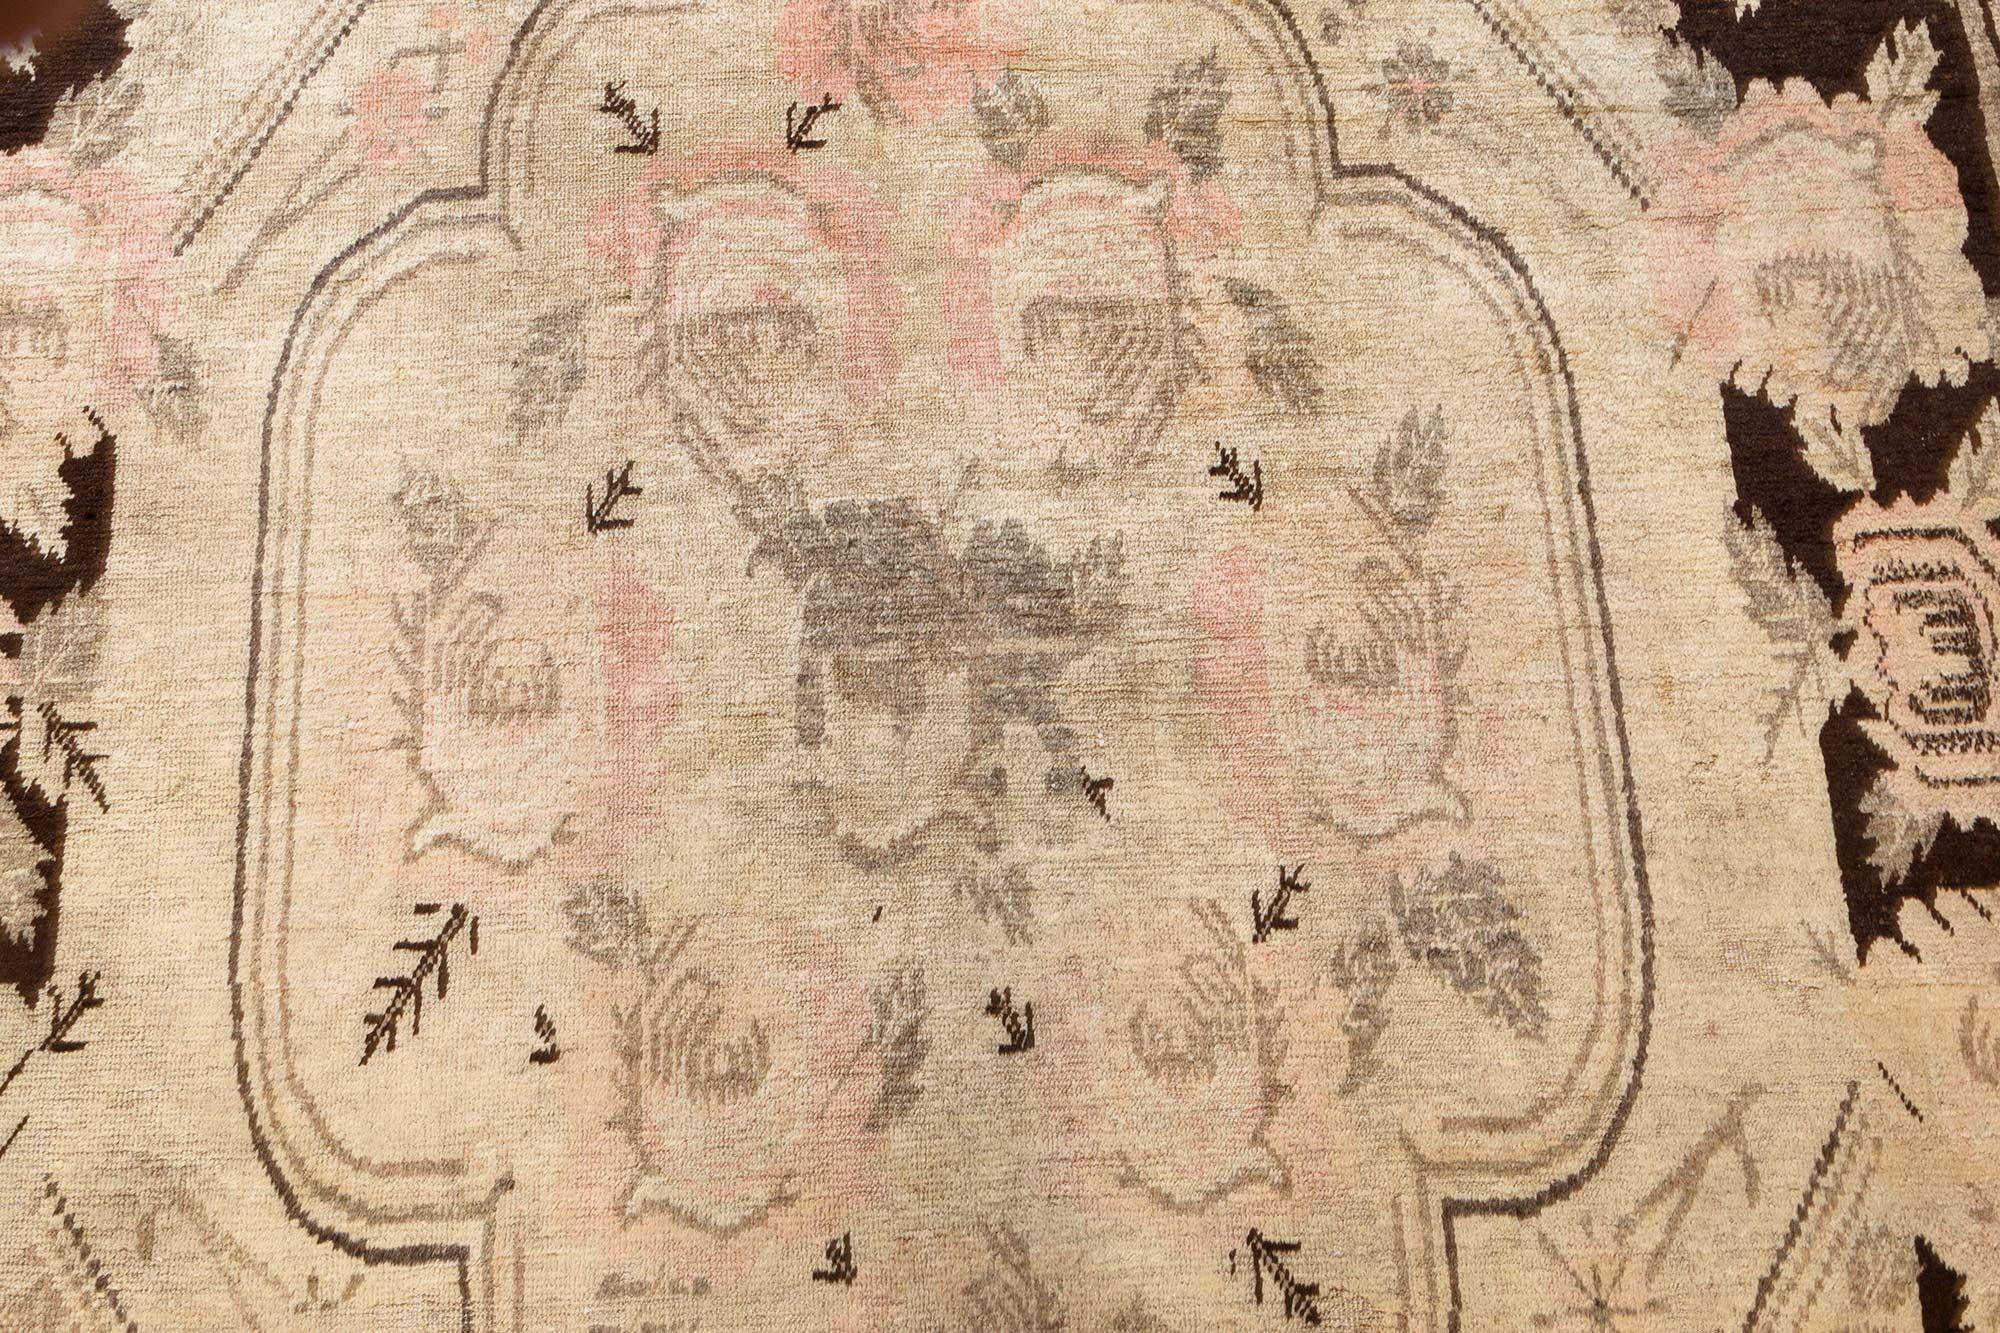 Early 20th century Samarkand (Khotan) carpet.
Size: 6'0